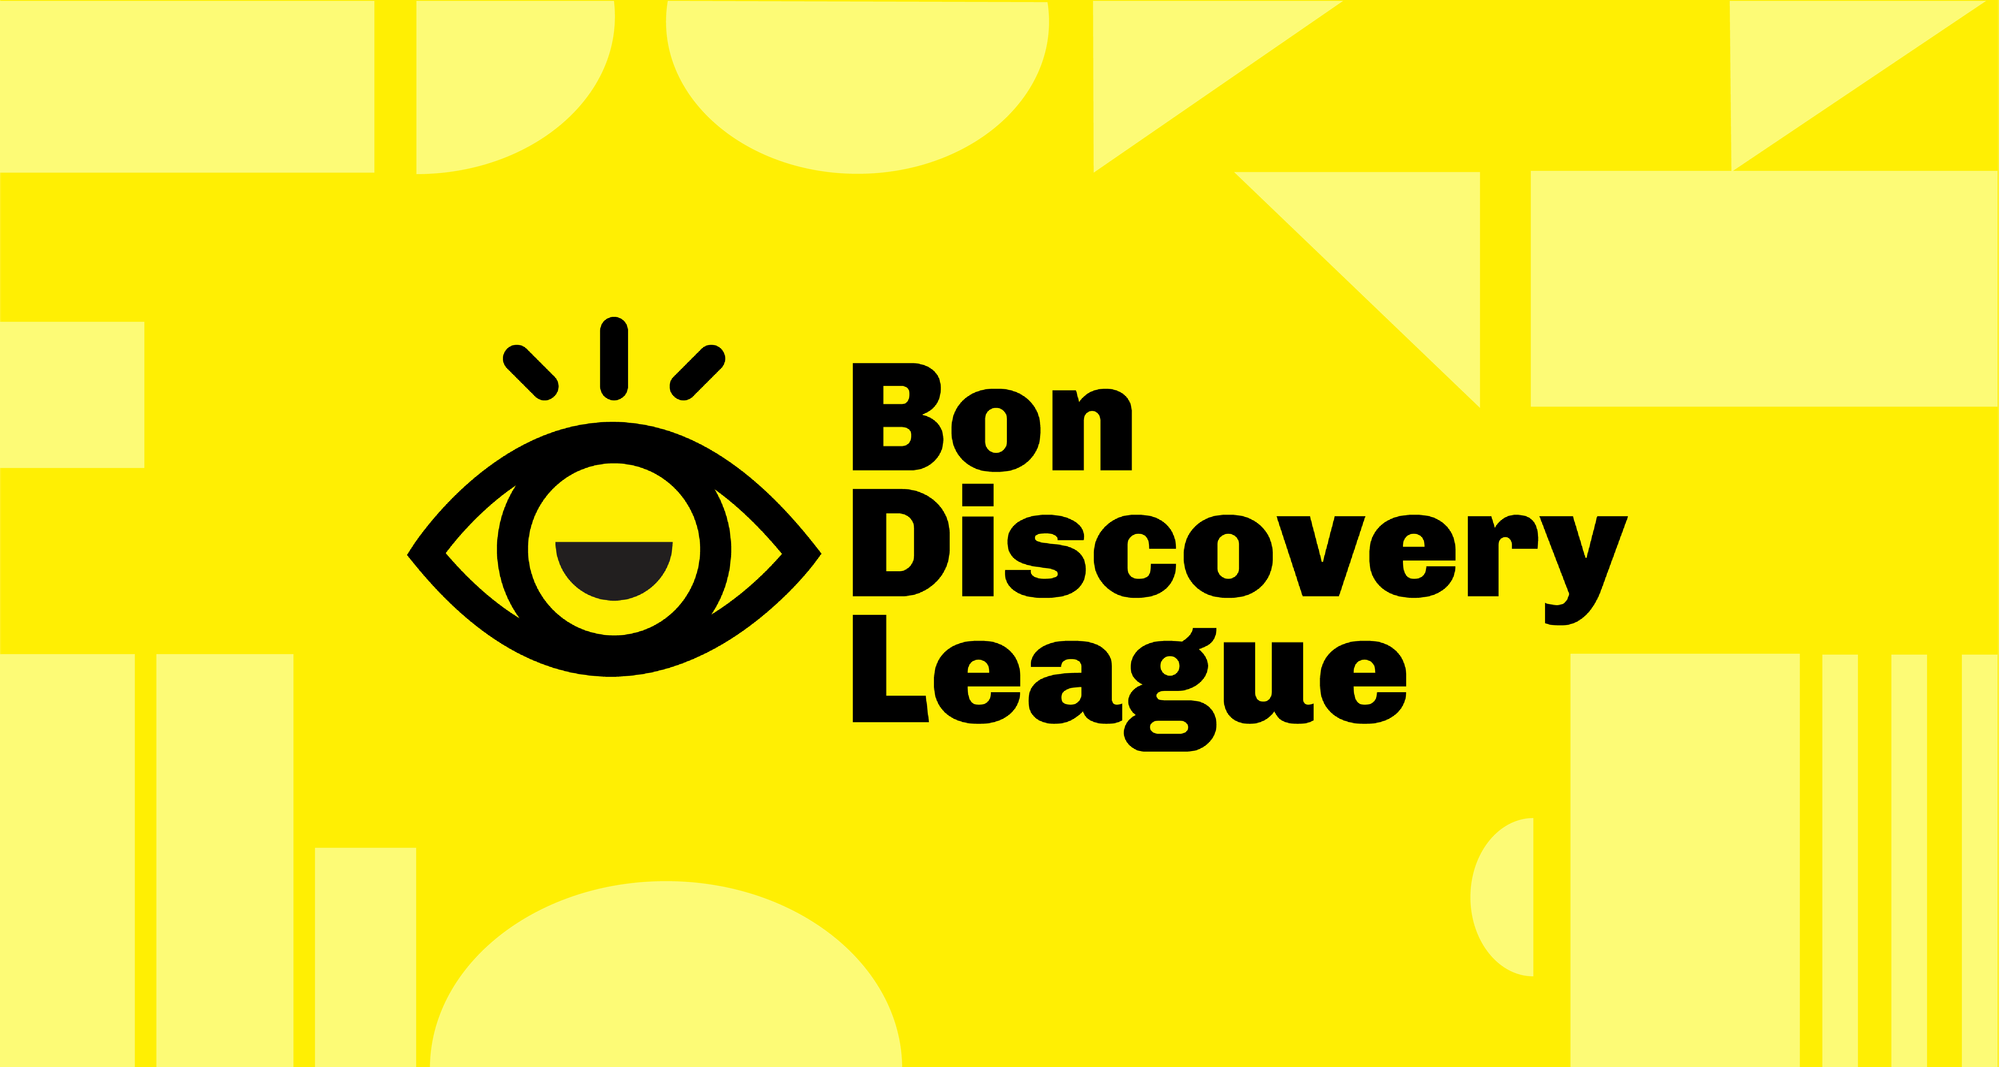 Bon Discovery League